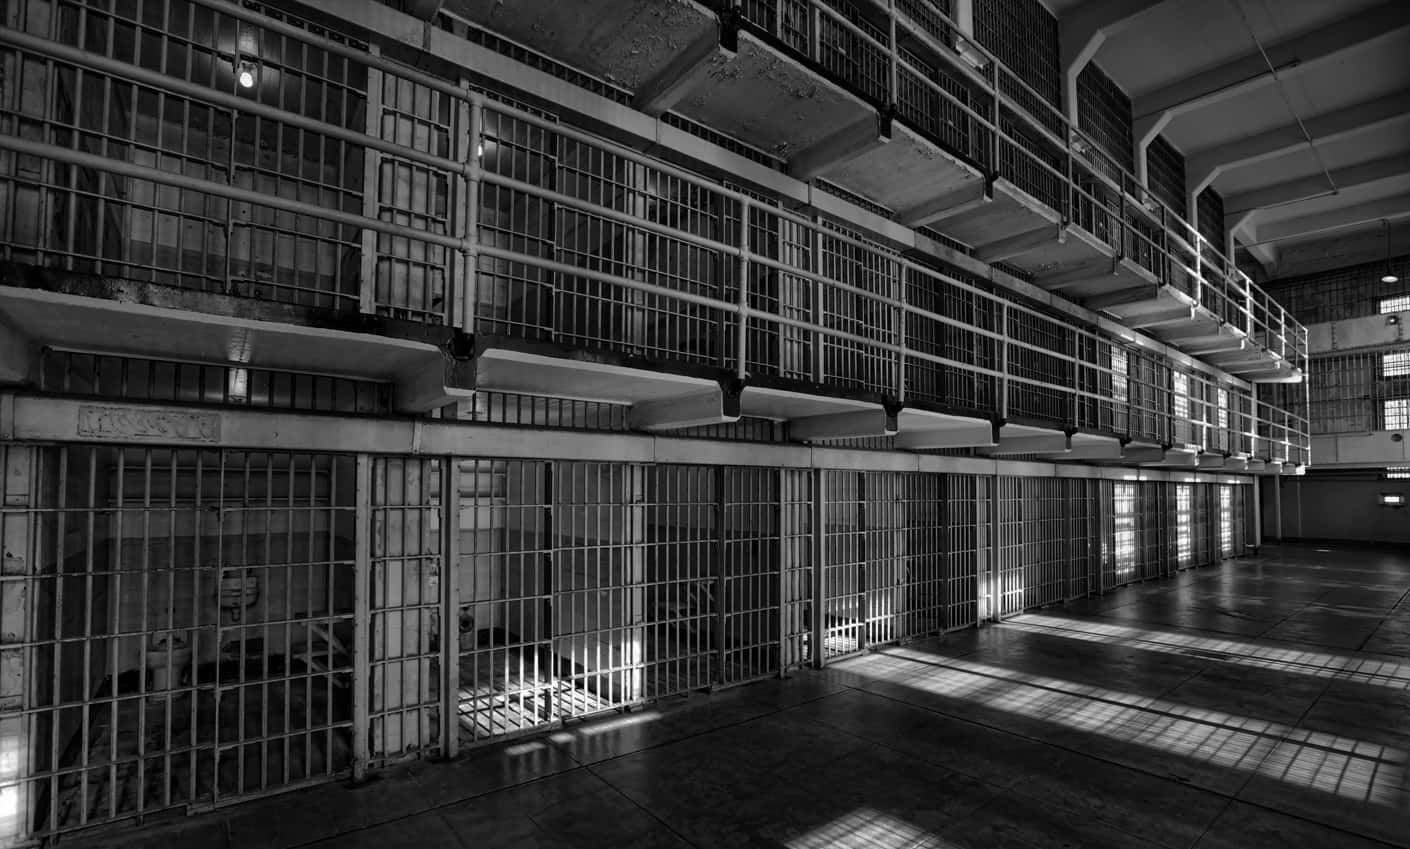 A Rare Look Inside a Jail Cell